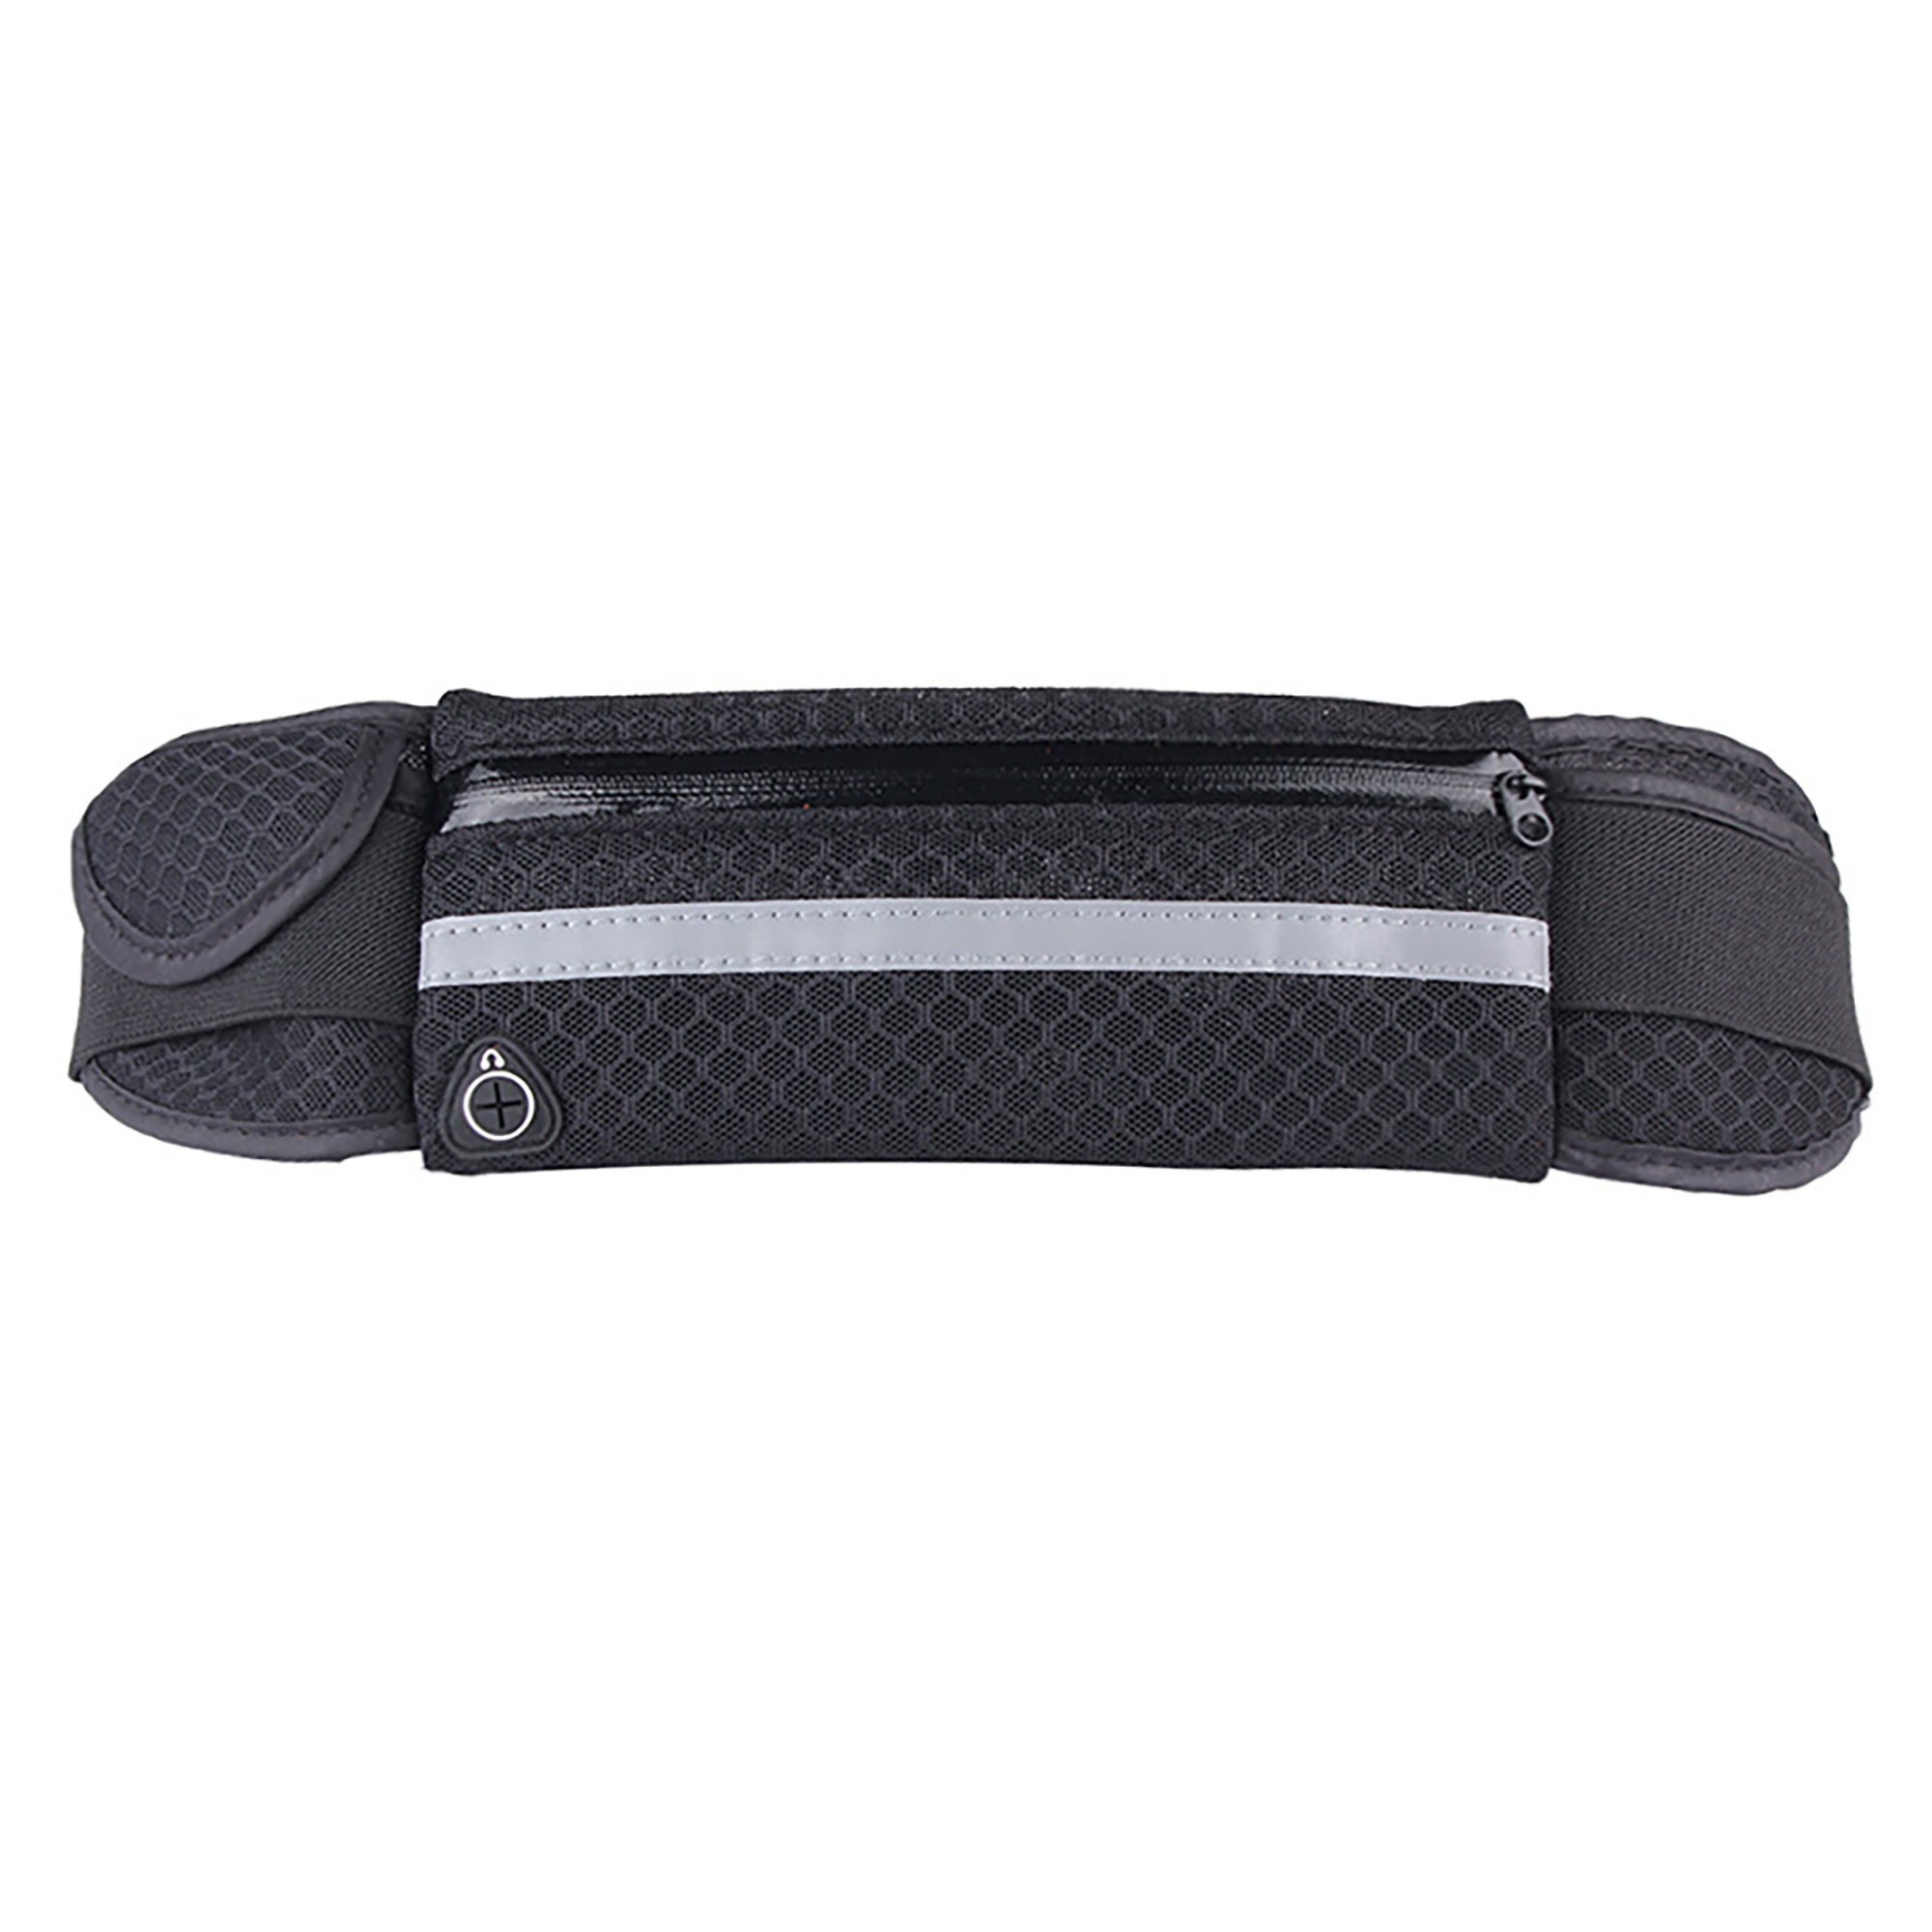 Black, One Size Pander Neoprene Fanny Pack 3 Pockets Waist Bag for Men & Women Fashion Water Resistant Hip Bum Bag with Adjustable Belt for Running Travel Hiking Workout Sportss 